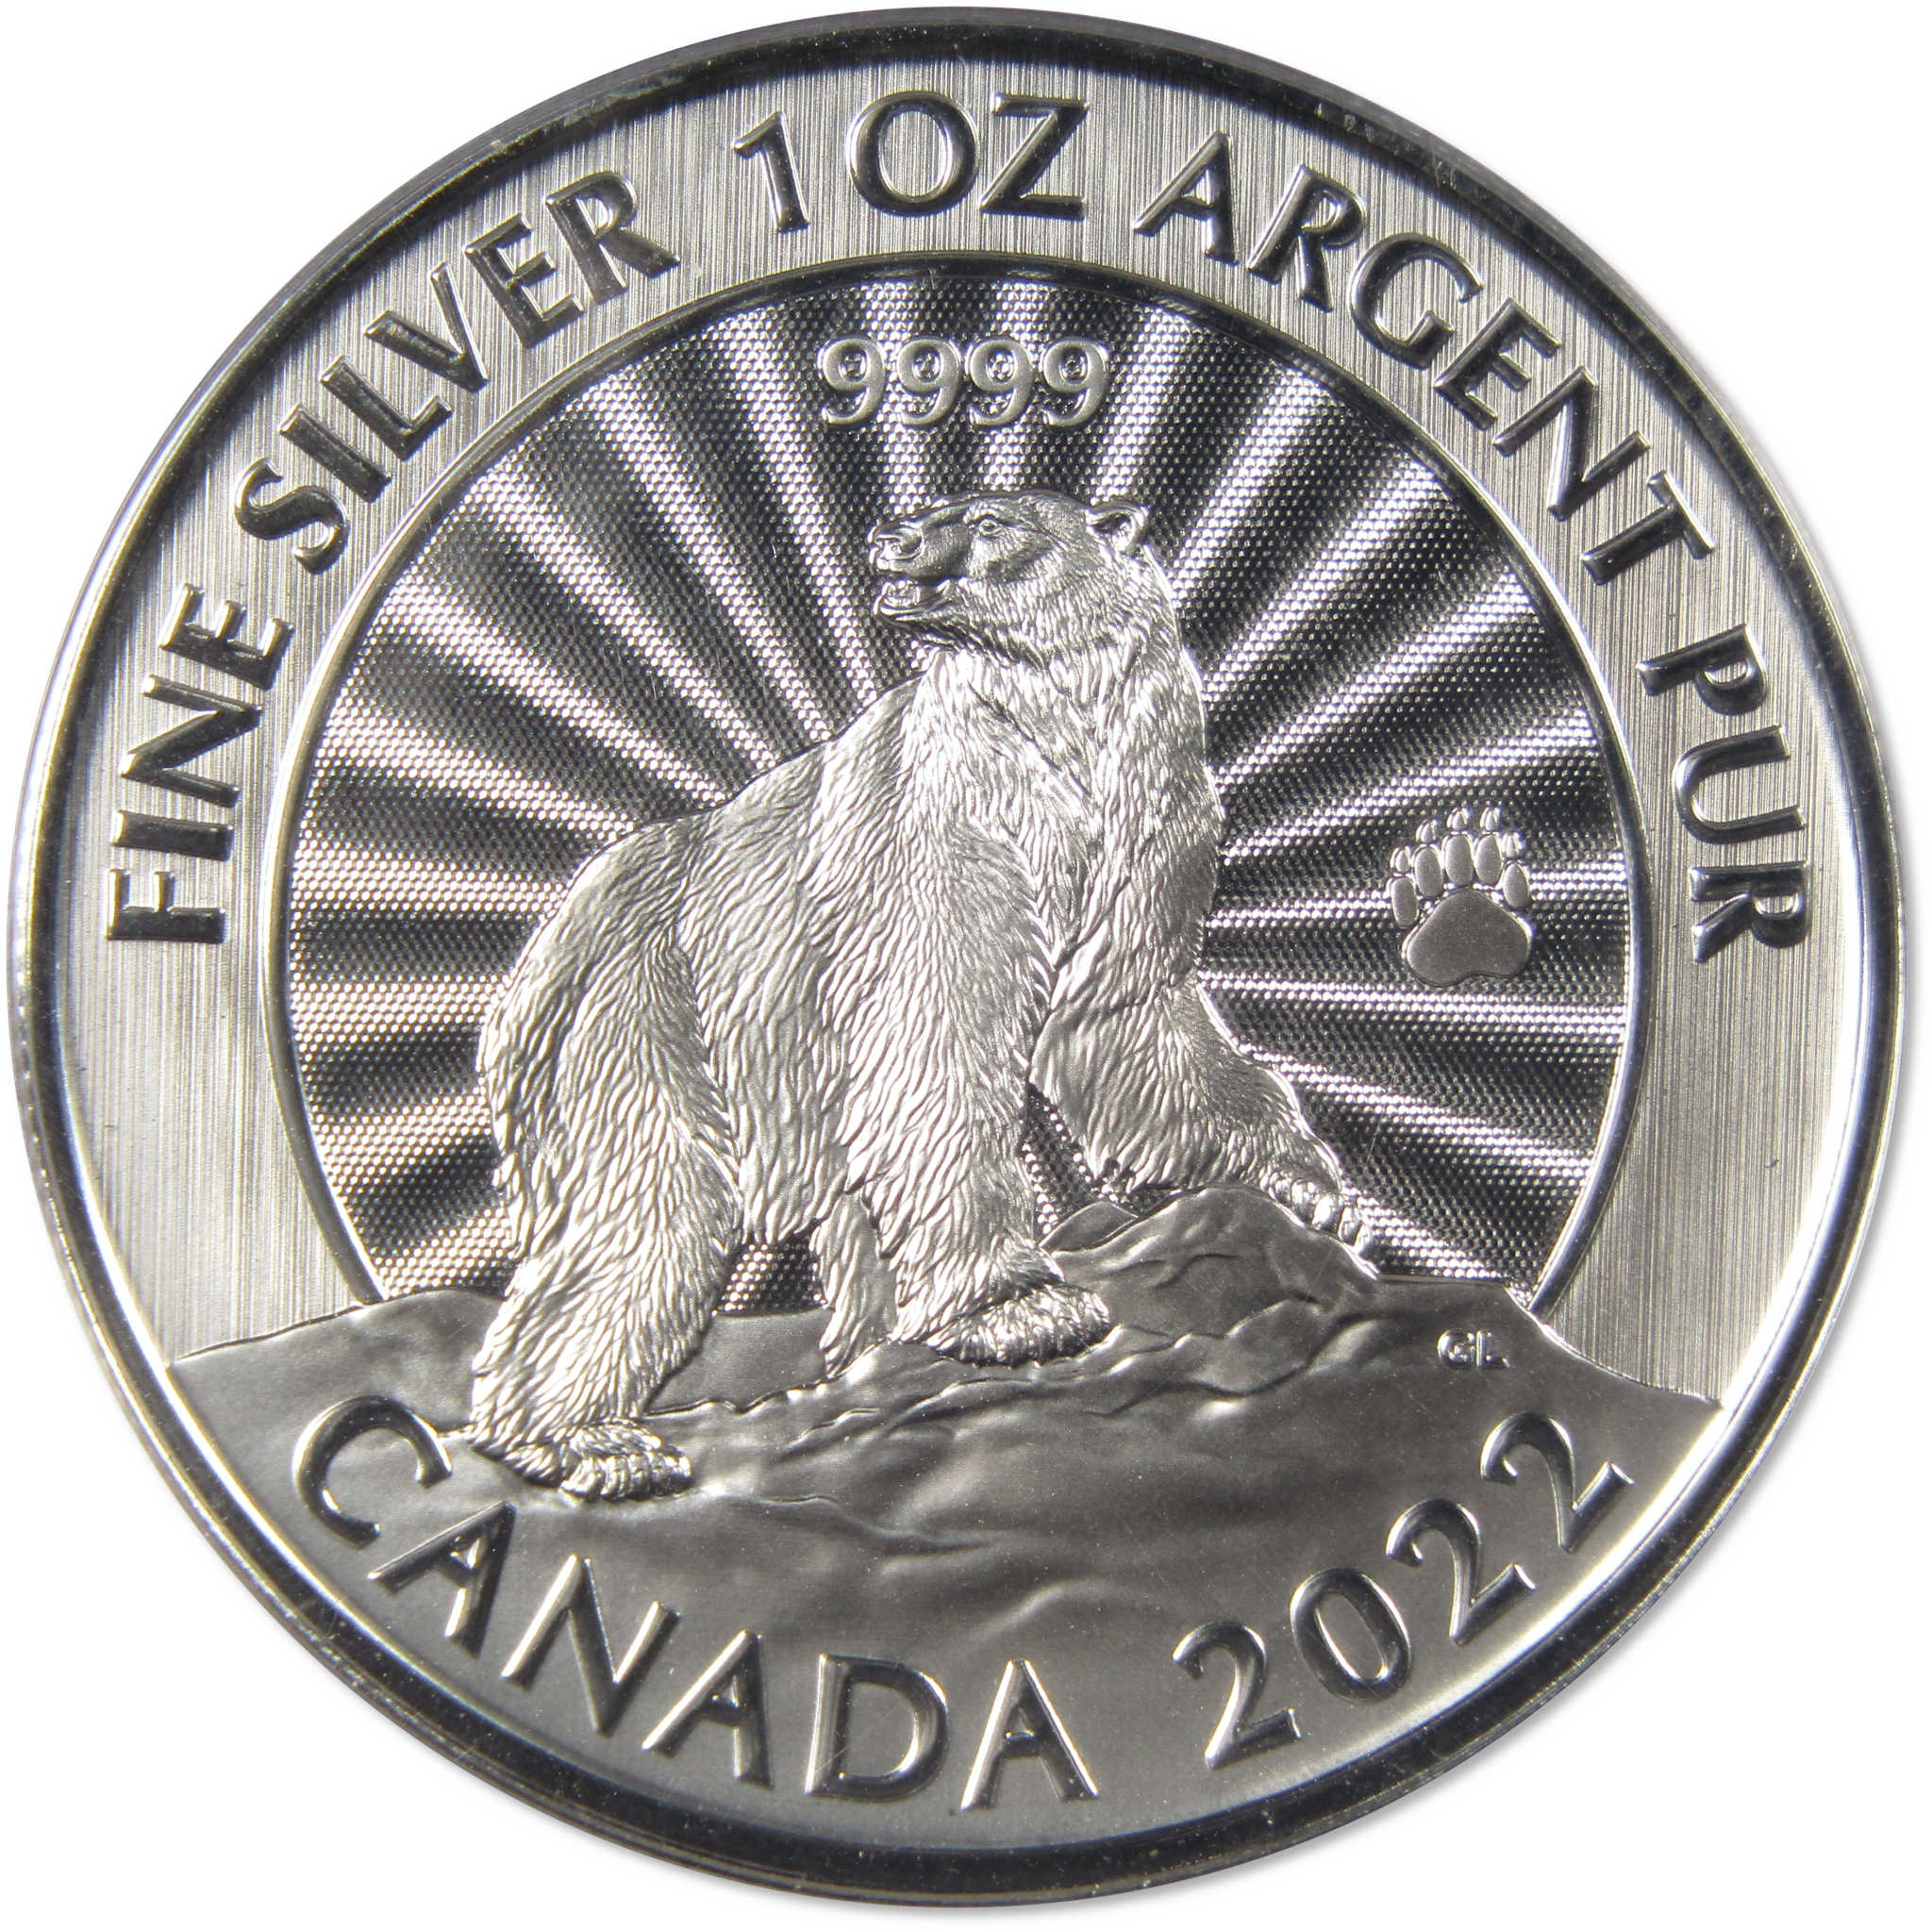 Majestic Polar Bear 1 oz .9999 Fine Silver Premium Bullion $5 Coin 2022 Canada